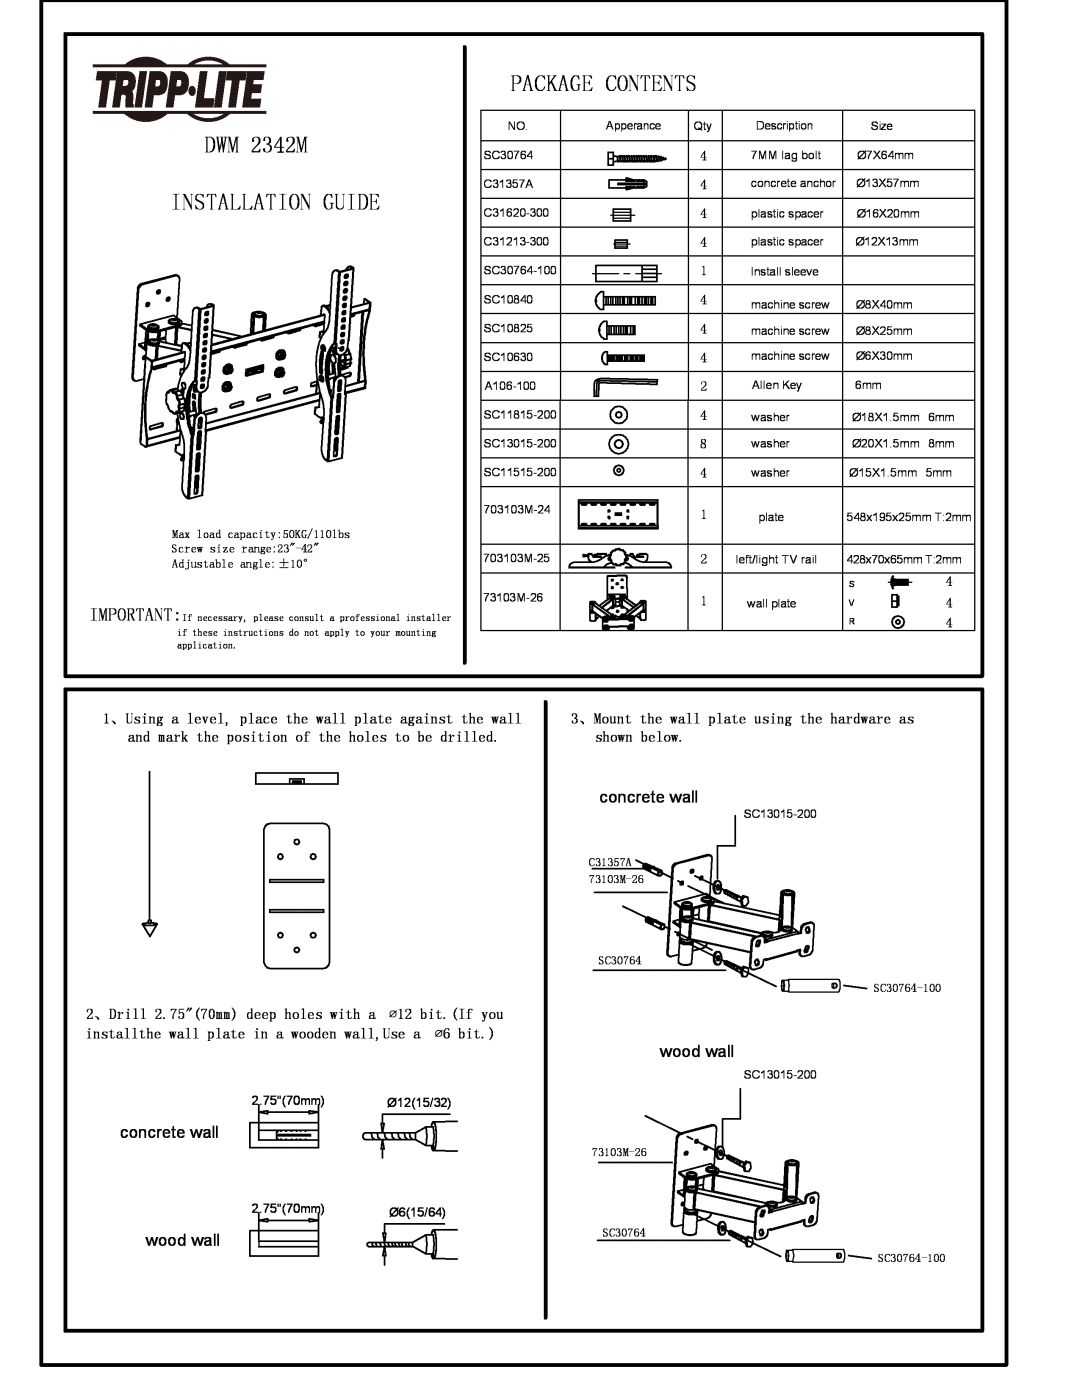 Tripp Lite manual DWM 2342M INSTALLATION GUIDE, Package Contents 